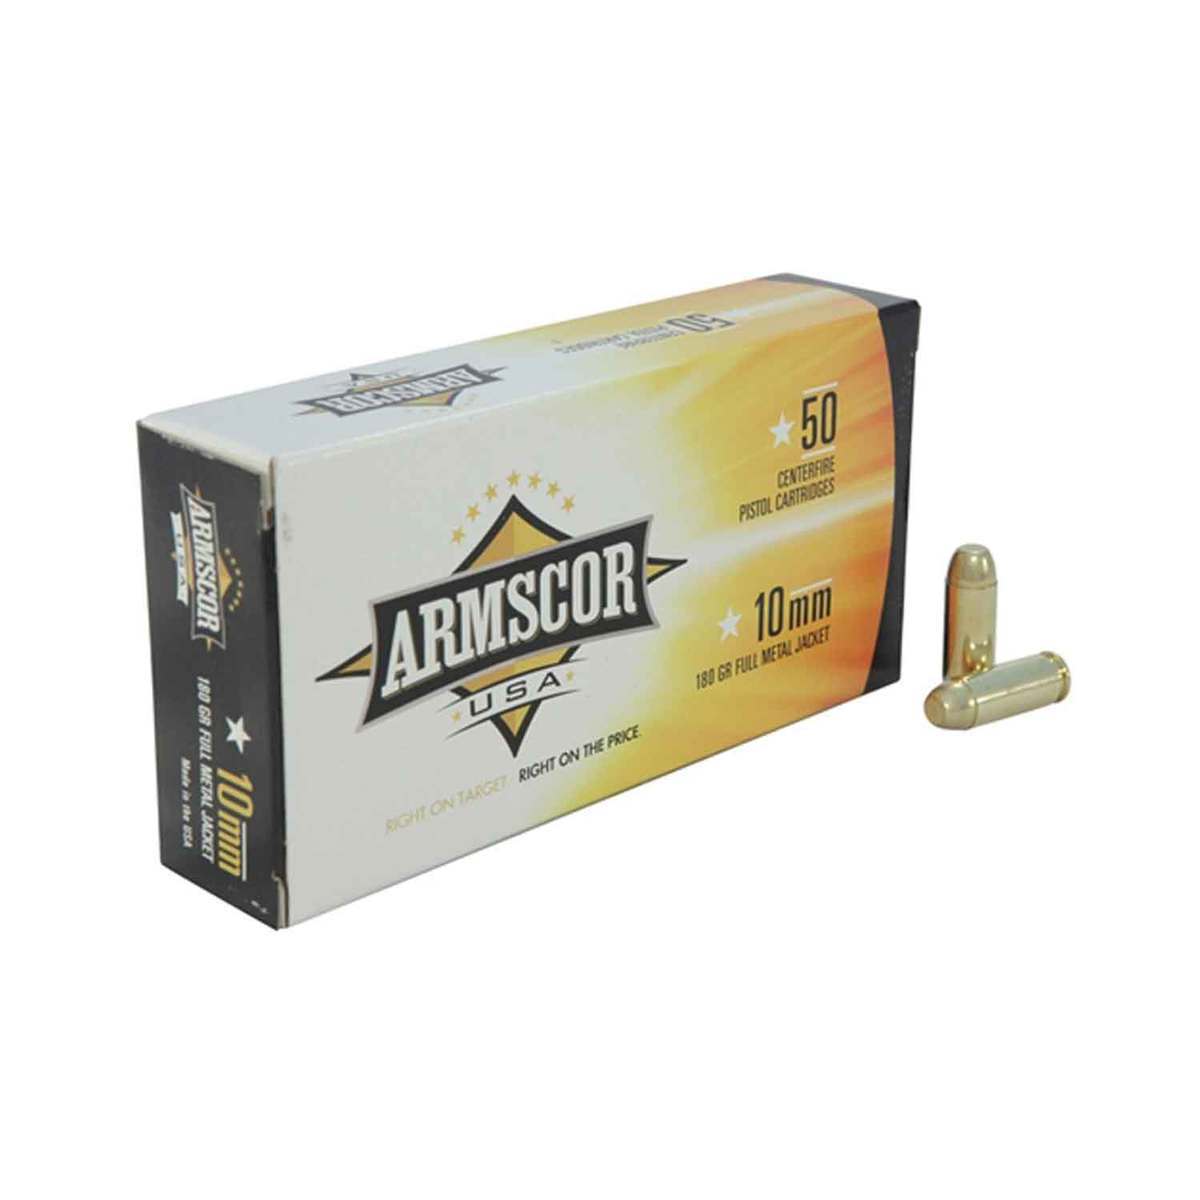 Armscor 10mm Auto 180gr Fmj Handgun Ammo 50 Rounds Sportsmans Warehouse 7558